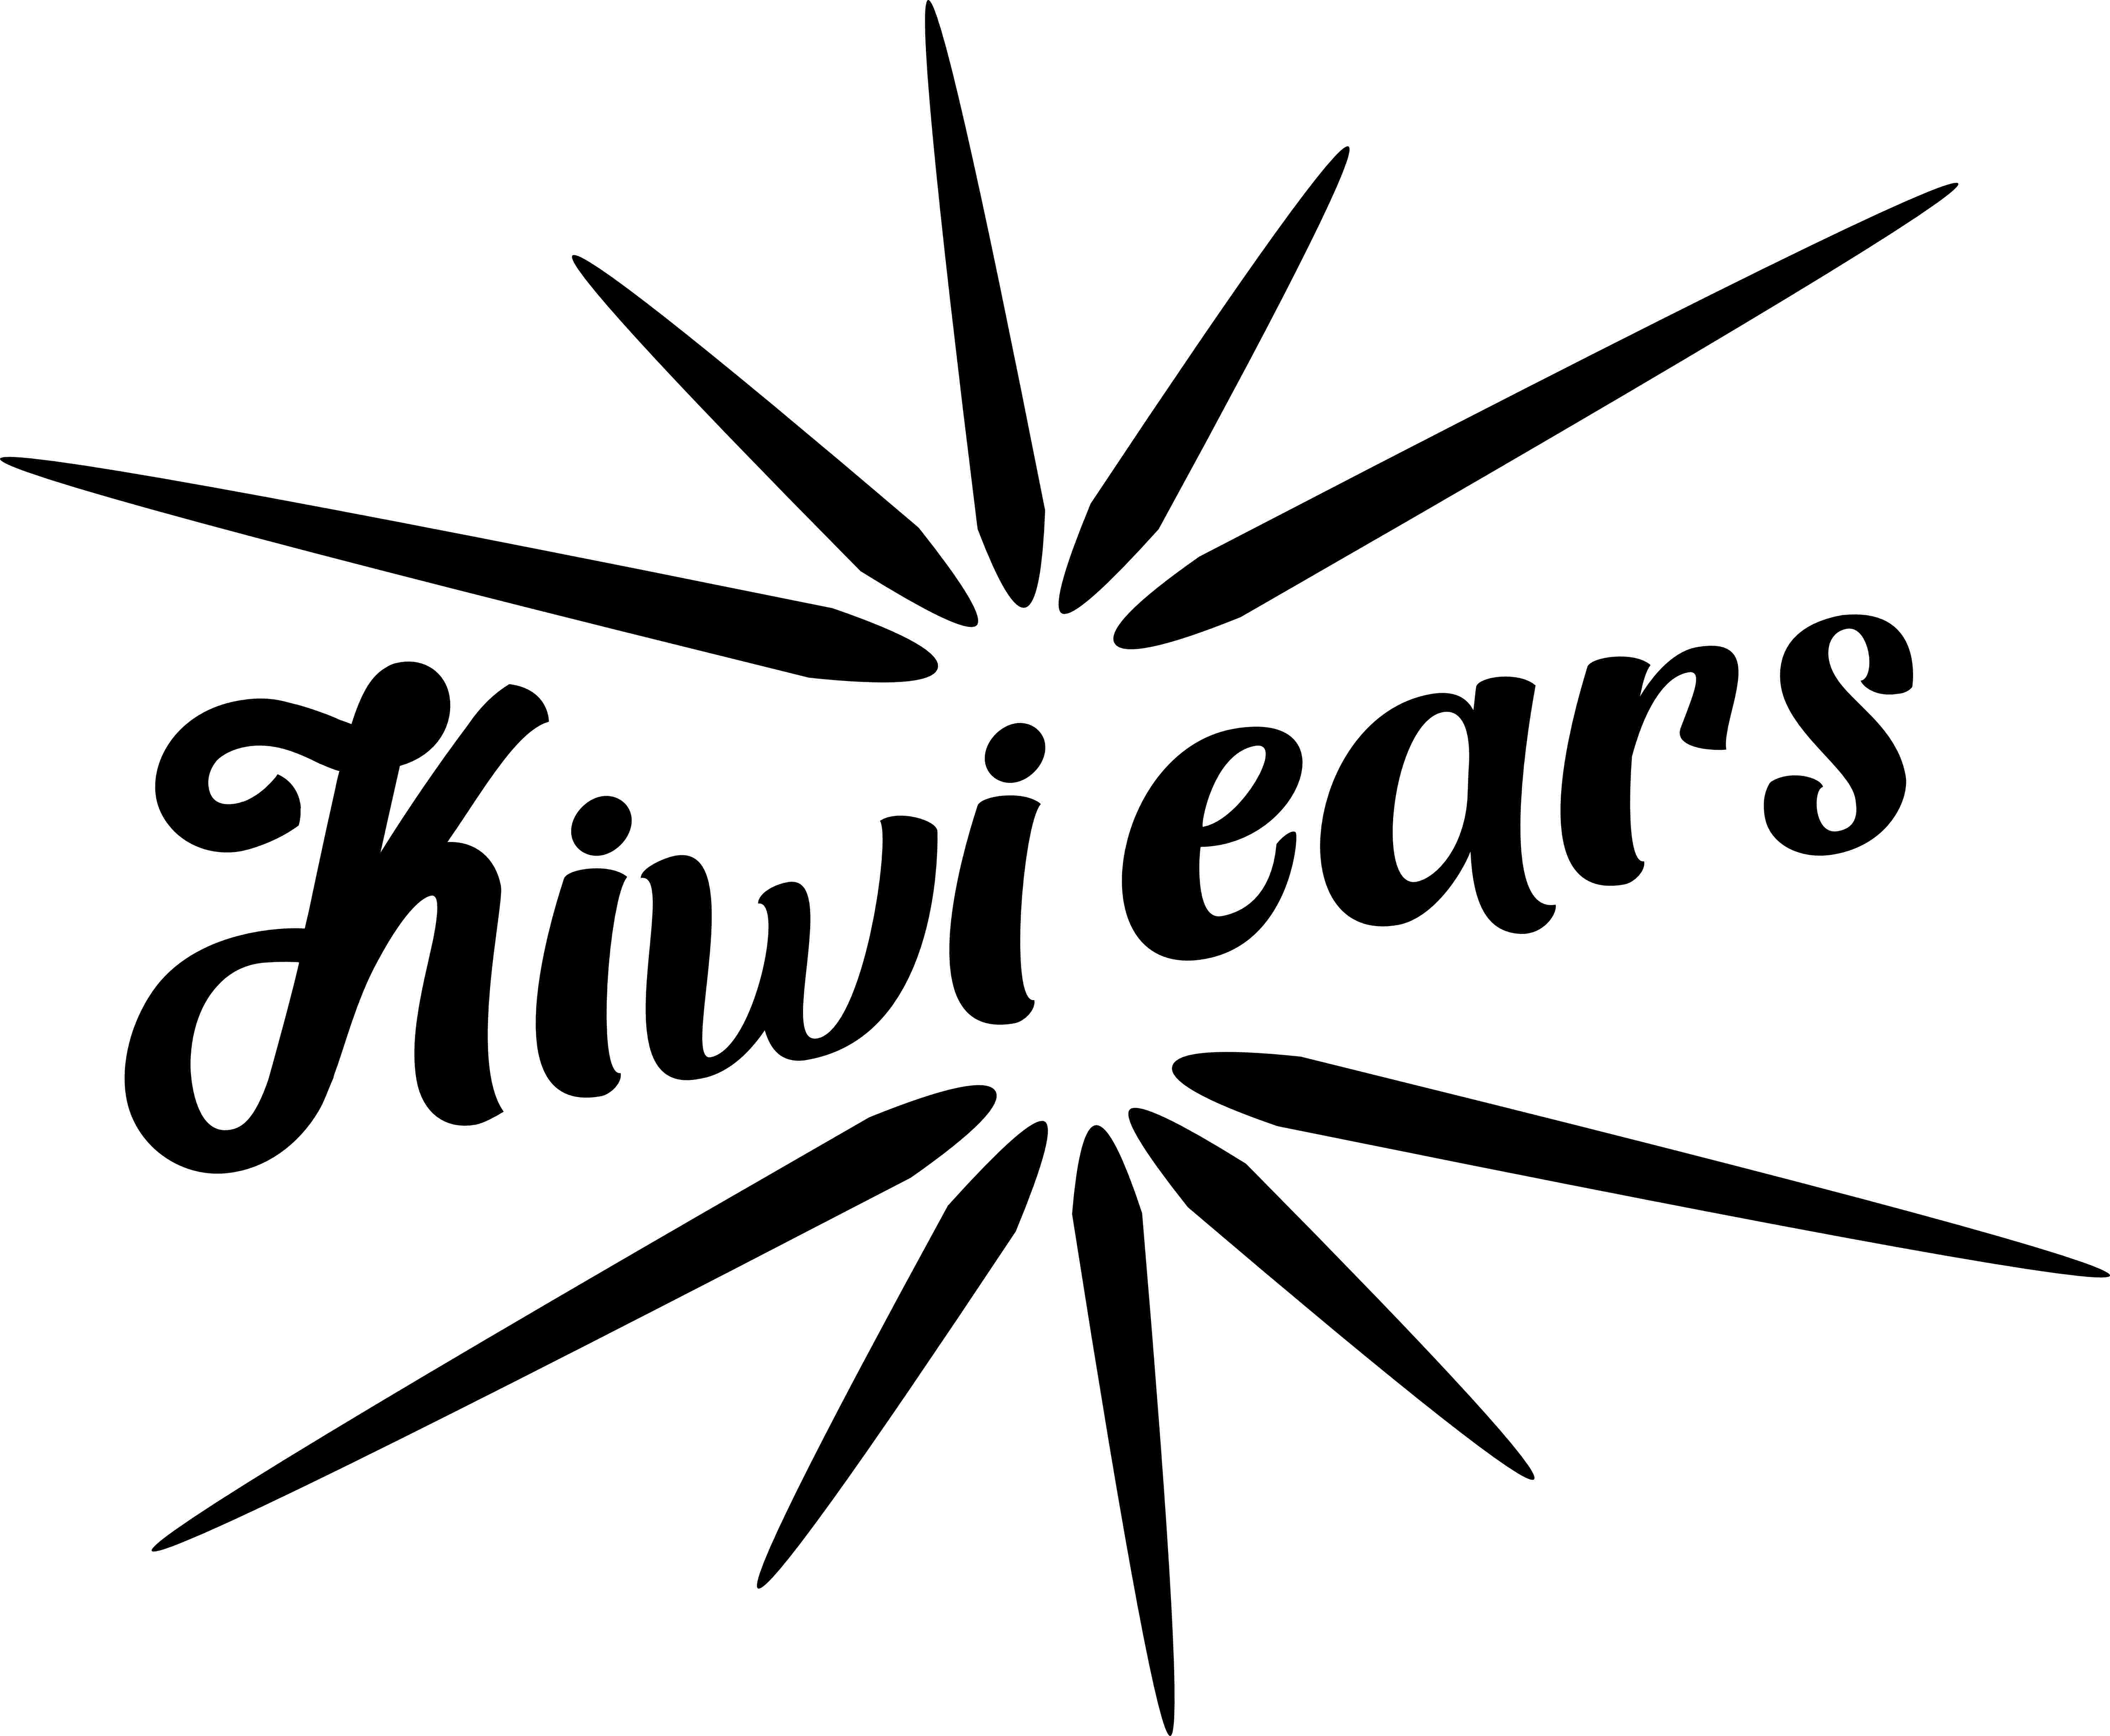 KIWI EARS